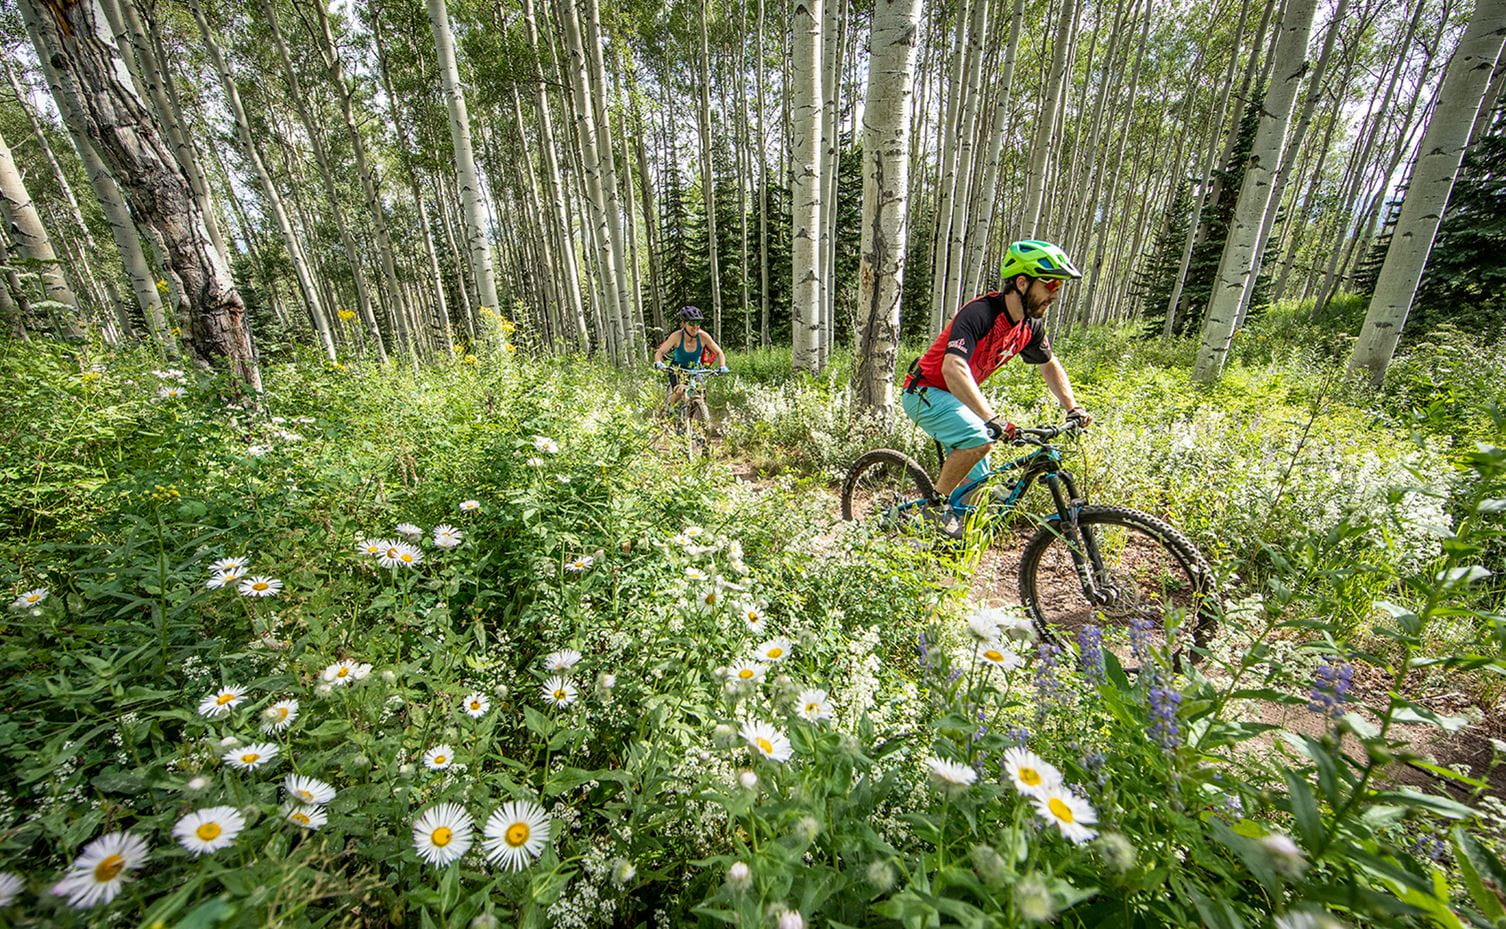 Couple rides through wildflowers and aspens on mountain bikes near Snowmass Colorado